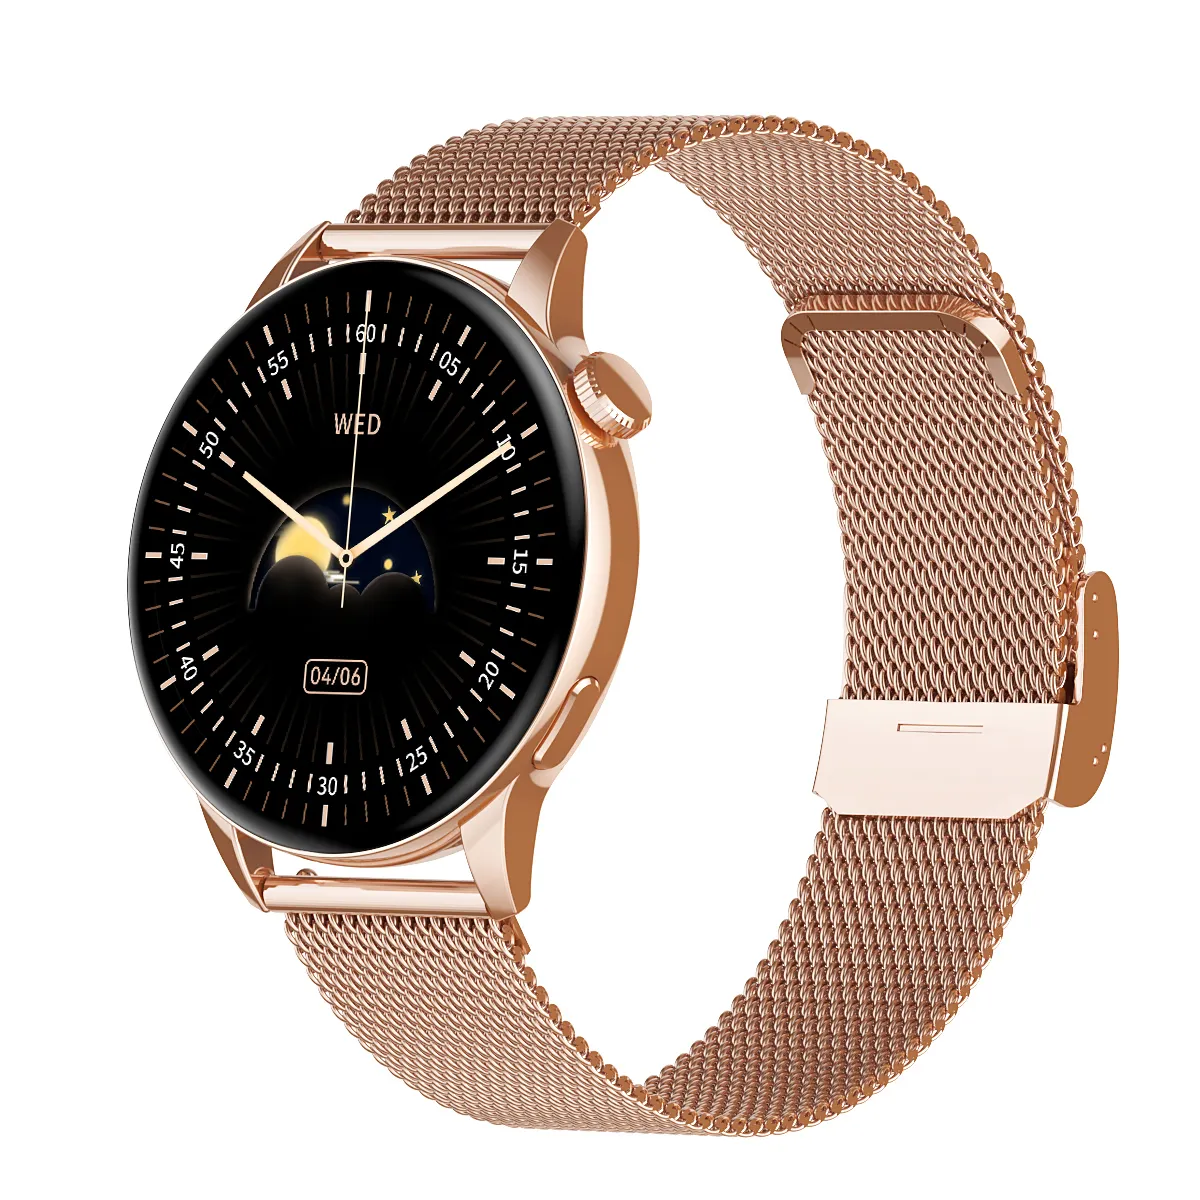 HD1 Alta Qualidade Rodada Dial Amoled Gold Smartwatch Meninas Reloj Compass Golden Smart Watch Mujer À Prova D' Água Para As Mulheres smart band